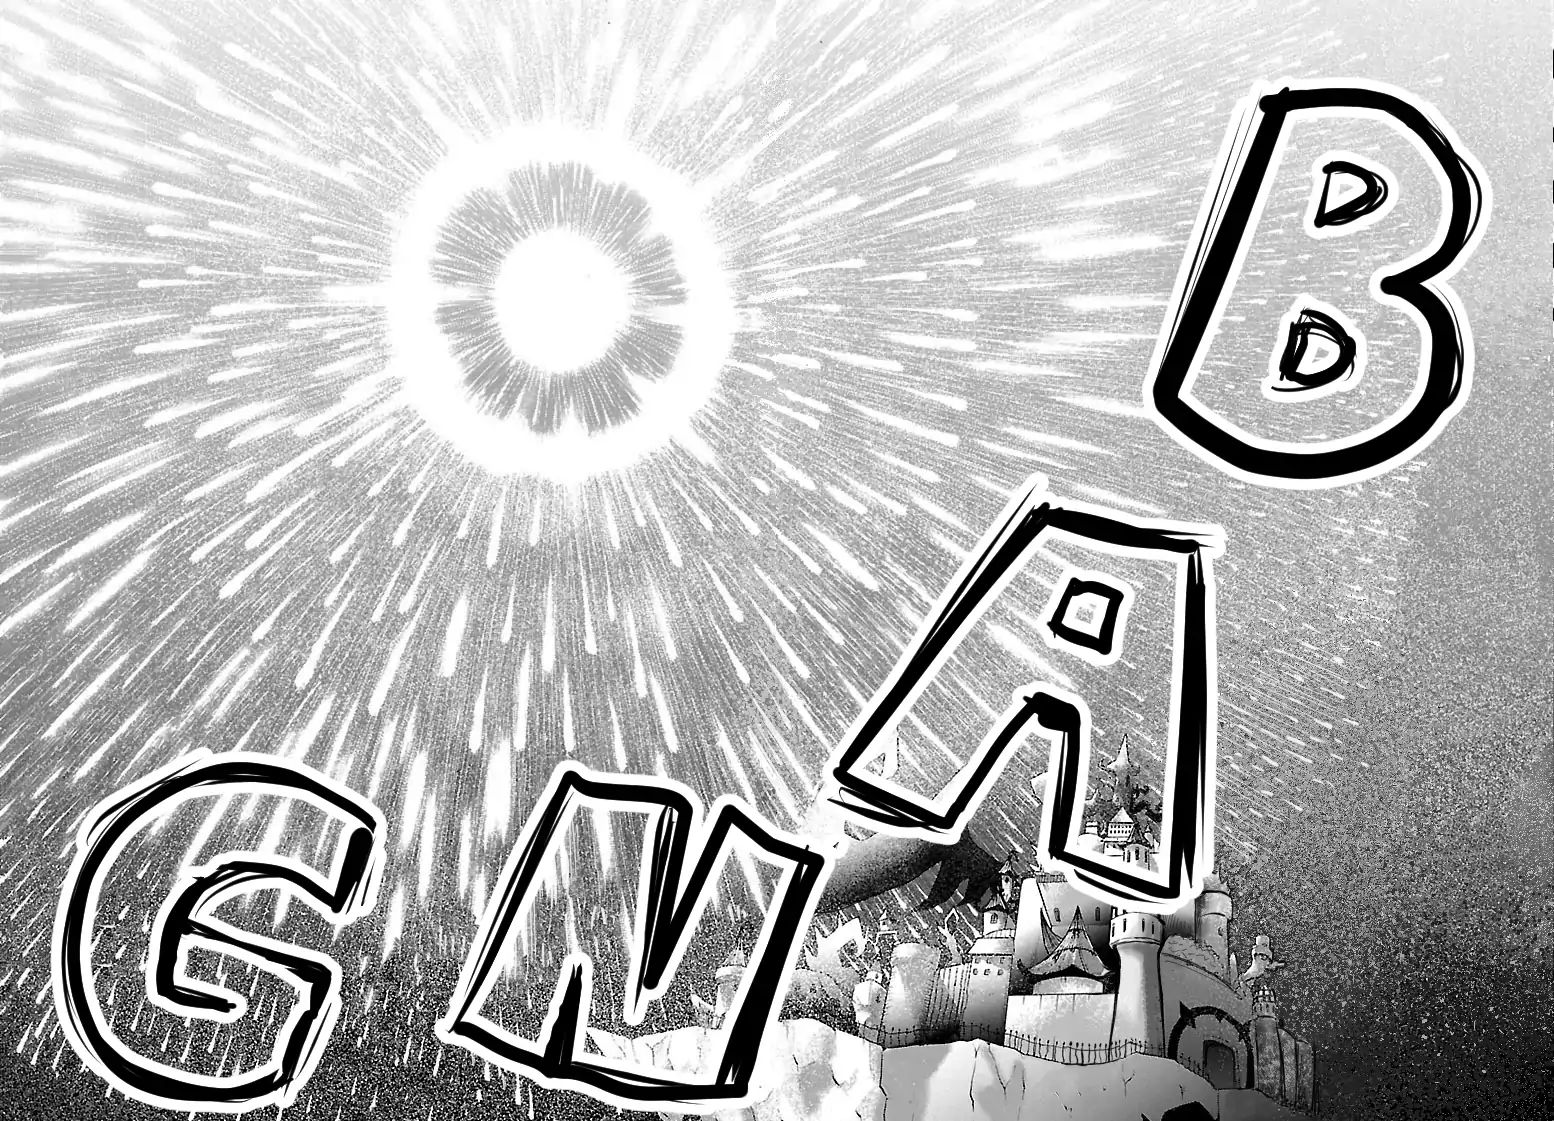 welcome to demon school manga, welcome to demon school iruma kun manga, demon school iruma kun manga, welcome to the demon school iruma kun manga, welcome to demon school iruma kun manga raw, read welcome to demon school iruma kun, iruma demon school manga, welcome to demon school iruma kun manga rock, welcome to demon school iruma kun manga online, welcome to demon school iruma manga, iruma kun season 2 manga, welcome to the demon school manga, welcome to demon school iruma kun scan vf, iruma kun demon school manga, welcome to demon school iruma kun season 2 manga, welcome to demon school iruma kun scan, manga welcome to demon school, welcome to demon school iruma kun read online, welcome to demon school iruma kun manga read online, welcome to demon school iruma kun manga english, read welcome to demon school iruma kun manga, welcome to demon school iruma kun manga season 2, manga welcome to demon school iruma kun, welcome to demon school season 2 manga, welcome to demon school iruma kun manga chapter 1, welcome to school iruma kun manga, iruma welcome to demon school manga, welcome to demon school iruma kun manga free, welcome to demon school iruma kun manga read, welcome to demon world iruma kun manga, read demon school iruma kun, welcome to demon school iruma kun chapter 93, welcome to demon school iruma kun novel, welcome to demon school iruma kun chapter 126, welcome to demon school manga english, welcome to demon school manga season 2, welcome to demon school iruma kun read manga, welcome to demon school iruma kun chapter 70, welcome to demon high school manga, welcome to demon school manga read, welcome to demon school iruma kun free manga, welcome to demon school iruma kun english manga, welcome to demon school iruma kun chapter 136, welcome to demon school iruma kun manga chapter 69, welcome to demon school iruma kun chapter 144, welcome to demon school iruma kun manga buy, welcome to demon school iruma kun volume 1, welcome to demon school iruma kun manga english release, welcome to demon school iruma kun chapter 76, welcome to demon school iruma kun manga chapter 105, welcome to demon school iruma kun manga amazon, iruma kun manga buy, welcome to demon school iruma kun manga hentai, welcome to demon school iruma kun manga chapter 82, welcome to demon school iruma kun chapter 53, mairimashita iruma kun, iruma kun, welcome to demon school iruma kun, welcome to demon school, iruma kun manga, mairimashita, demon school, demon school iruma kun, iruma manga, welcome to the demon school, iruma demon school, demon school anime, mairimashita iruma, iruma anime, mairimashita manga, welcome to the demon school iruma kun, suzuki iruma, demon school manga, welcome to demon school iruma, demon school iruma, iruma kun anime, welcome to demon school anime, welcome to demon school iruma kun anime, iruma kun mangakakalot, welcome to demon school iruma kun japanese name, iruma kun manga online, anime welcome to demon school, welcome to demon, welcome demon school, welcome to school iruma kun, anime mairimashita, iruma kun mairimashita, welcome to demon school online, eiko iruma, welcome to demon school iruma kun mal, iruma kun manga english, welcome iruma kun, welcome to demon school iruma kun review, welcome to demon school gogoanime, iruma kun crunchyroll, welcome to demon school iruma kun s2, iruma kun welcome to demon school, iruma goes to demon school, iruma kun demon